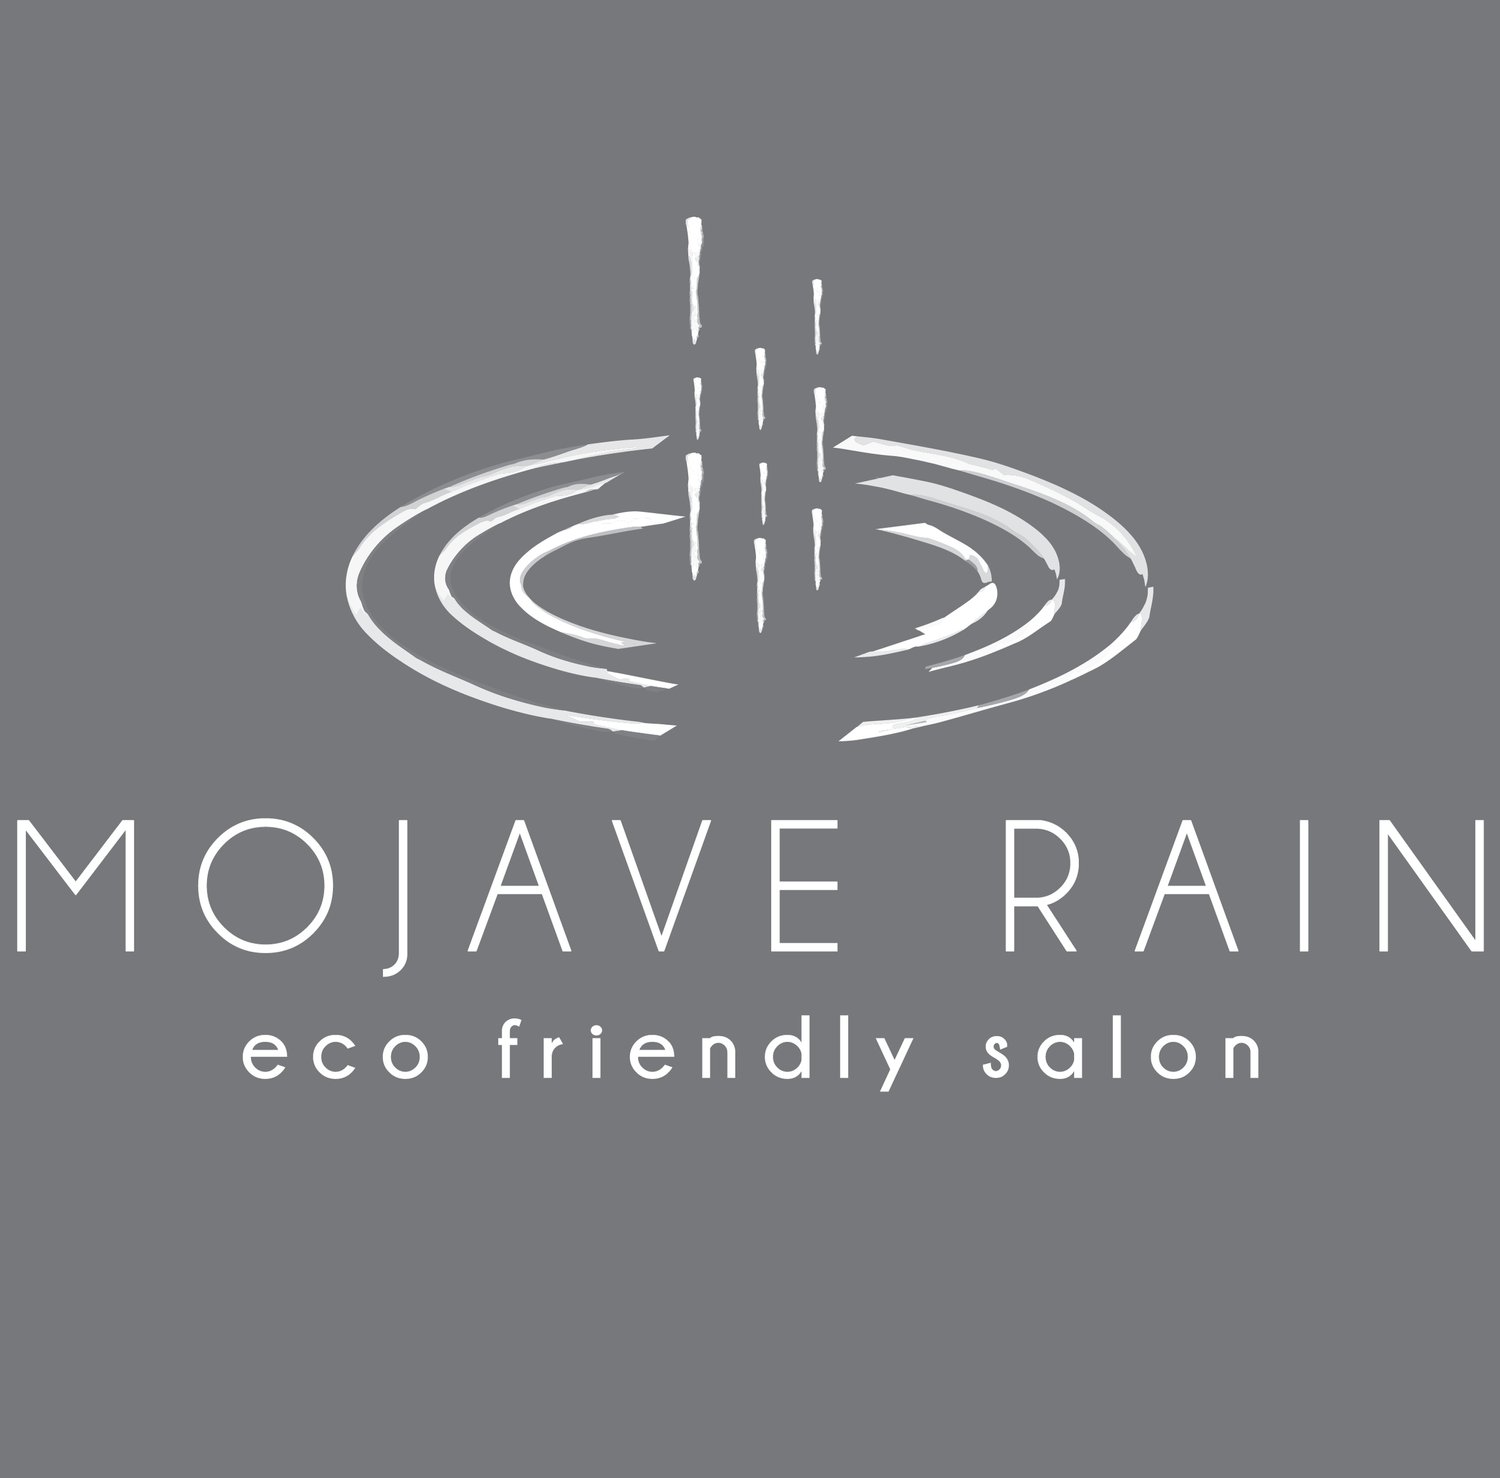 Mojave Rain Salon